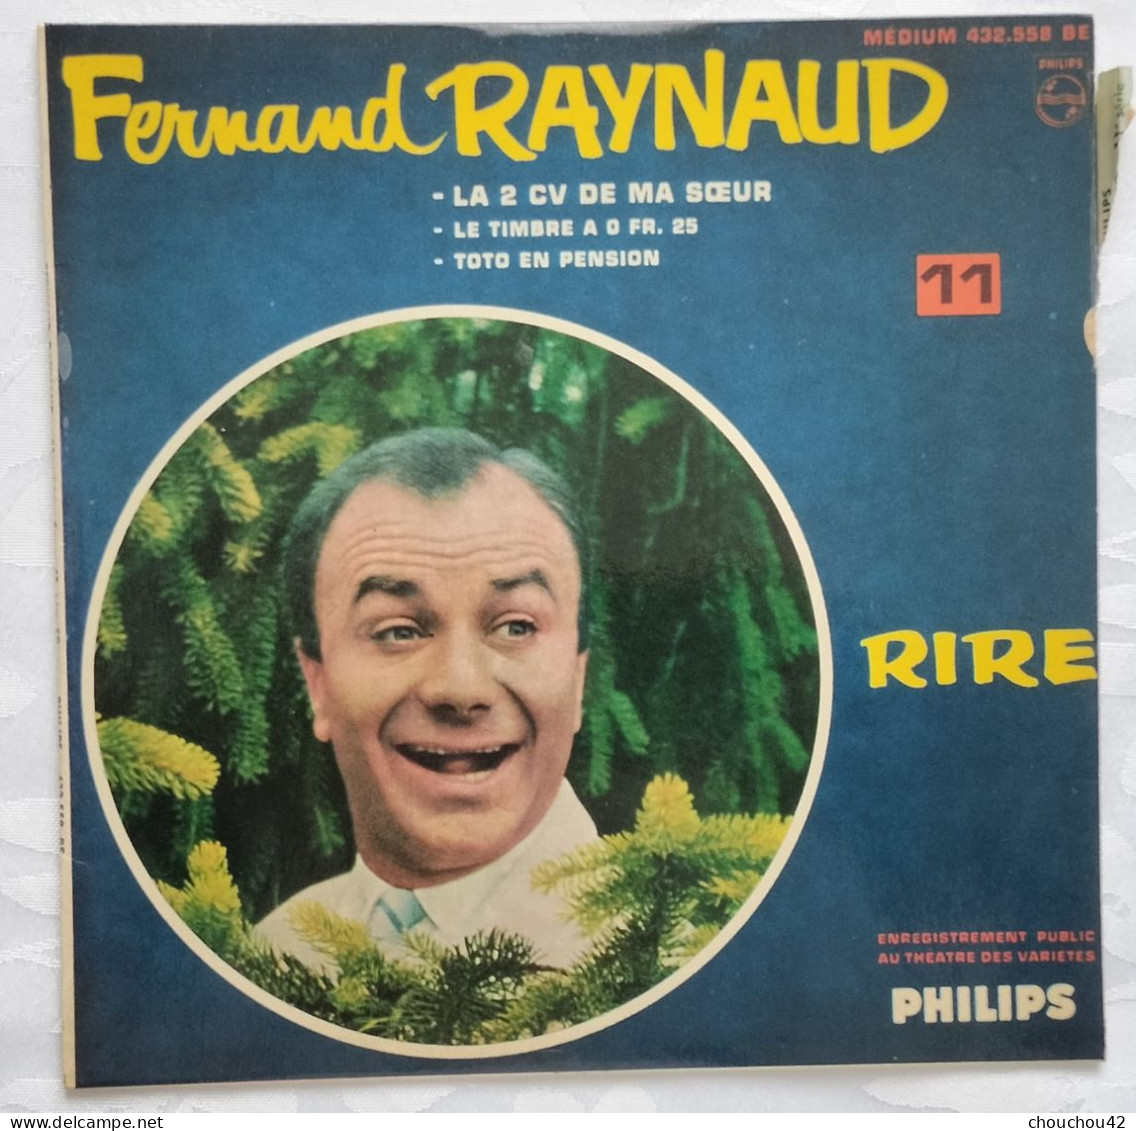 Fernand Raynaud - Humour, Cabaret